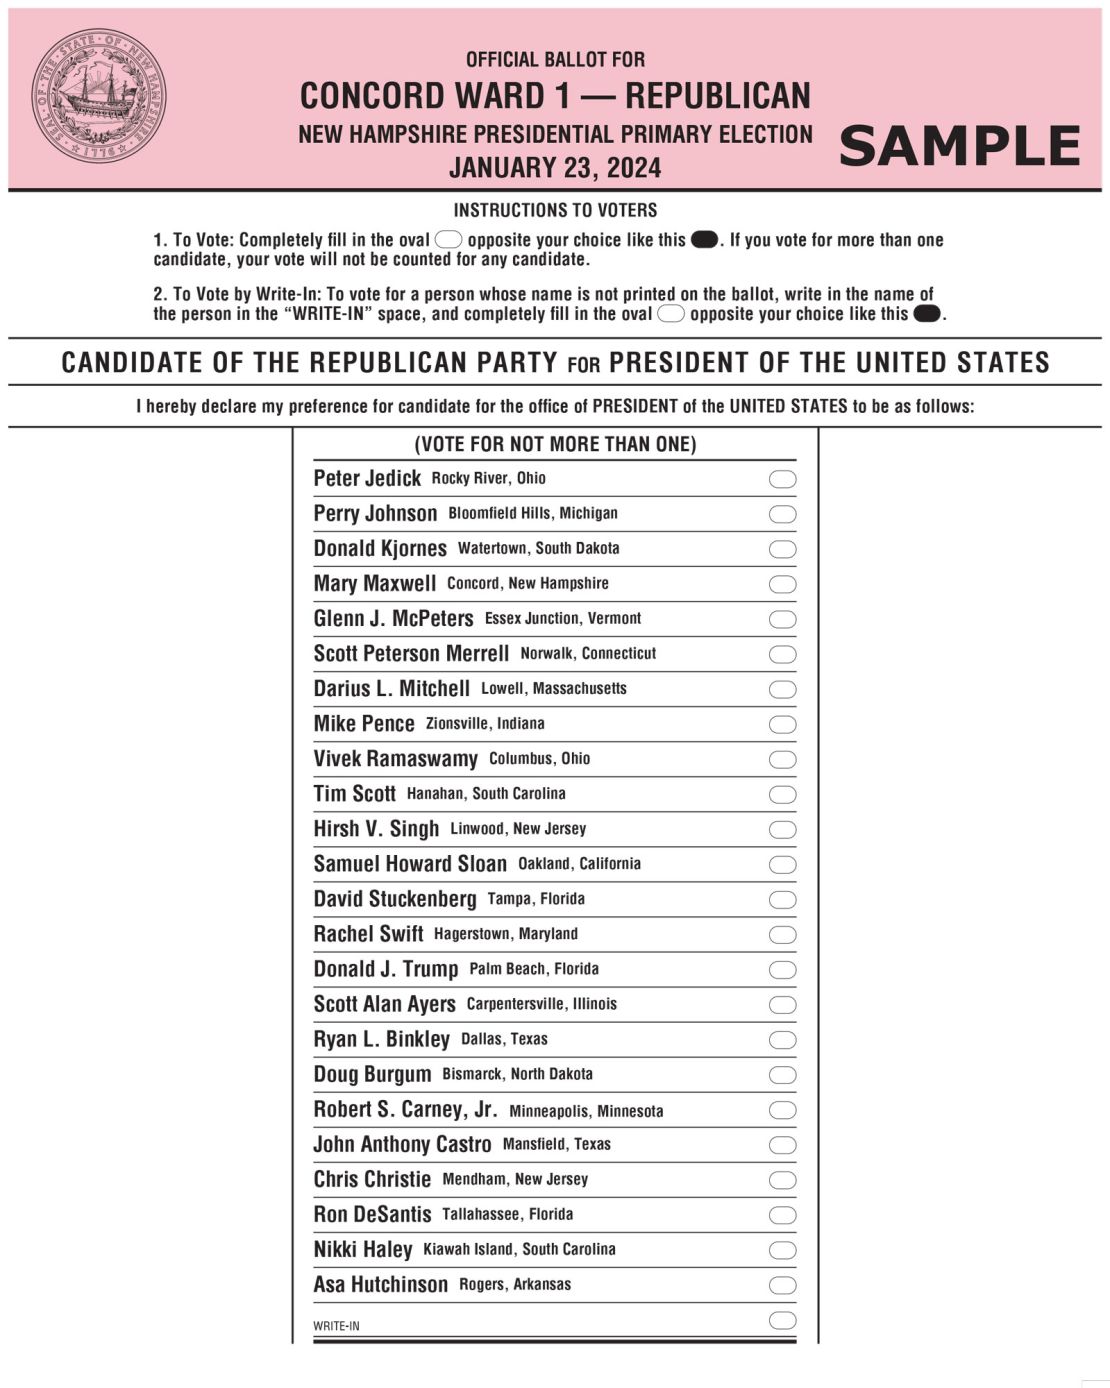 A sample Republican ballot for Concord, New Hampshire's first ward.